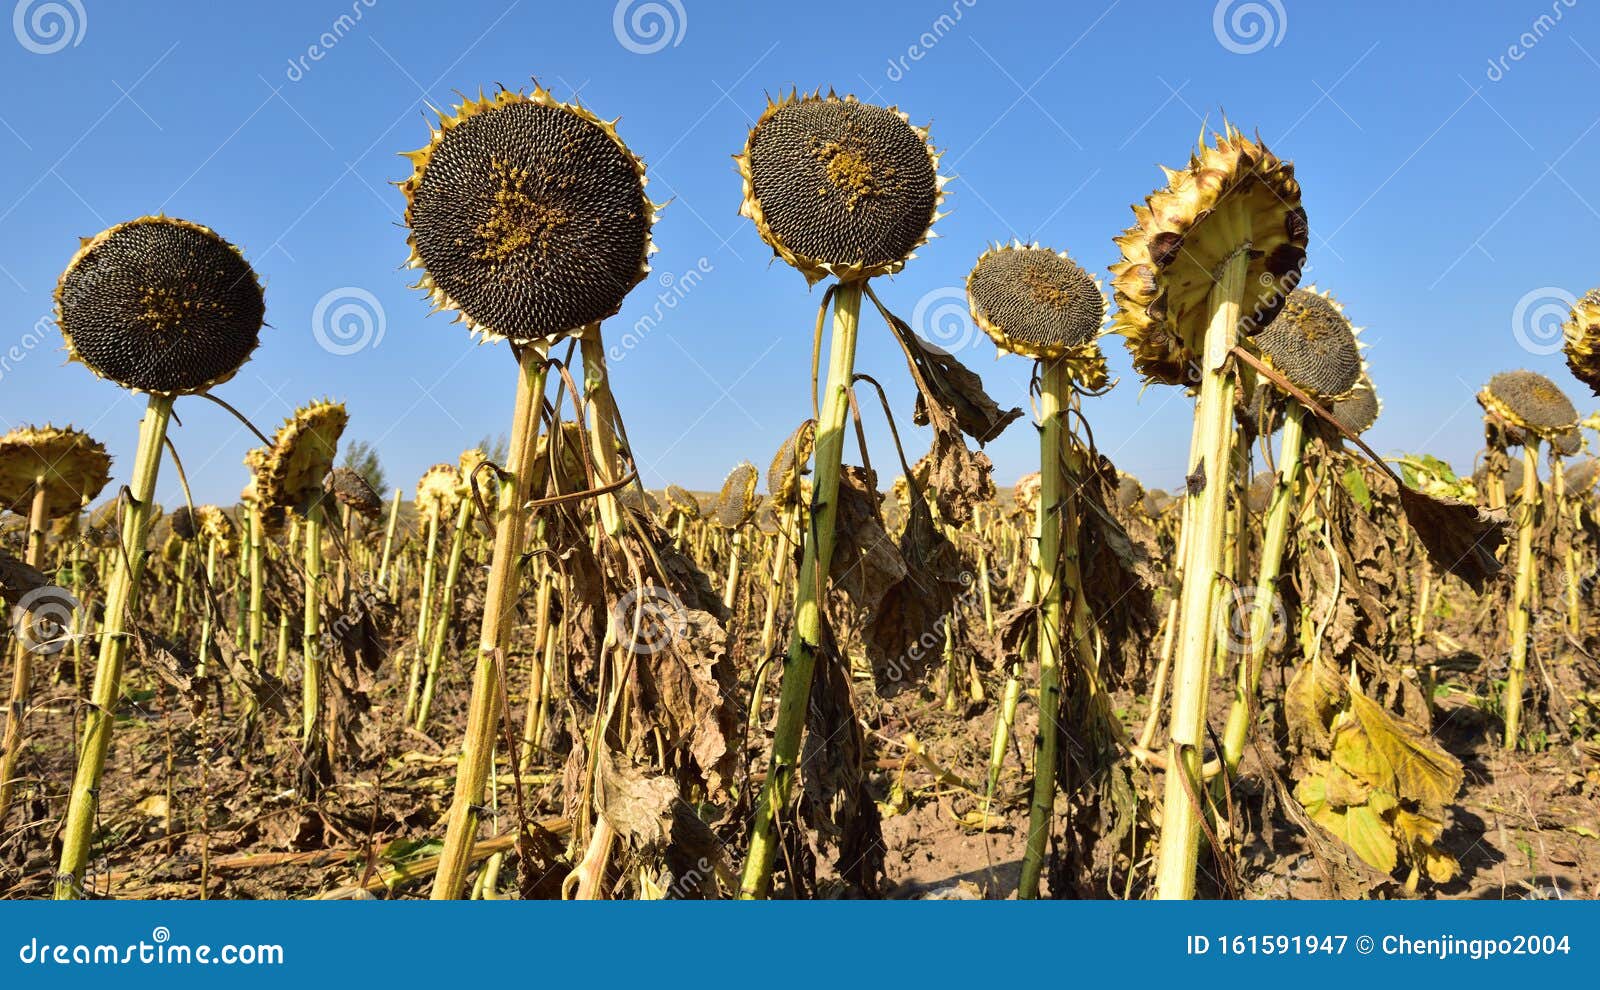 Mature sunflower seeds stock image. Image of crop, fruit - 161591947